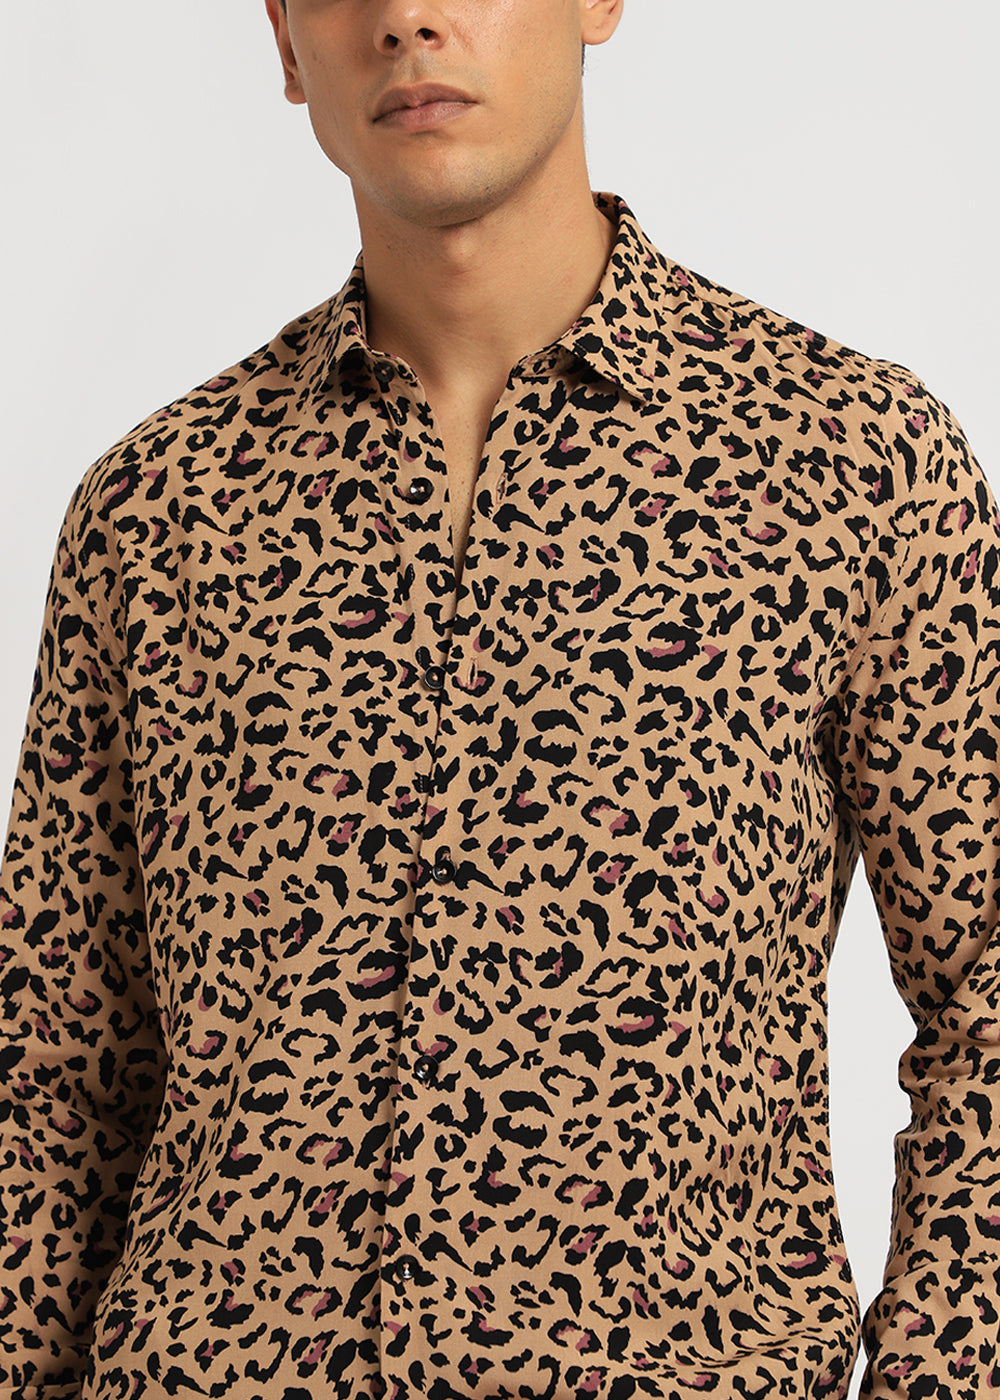 Animalistic Print Full sleeve shirt